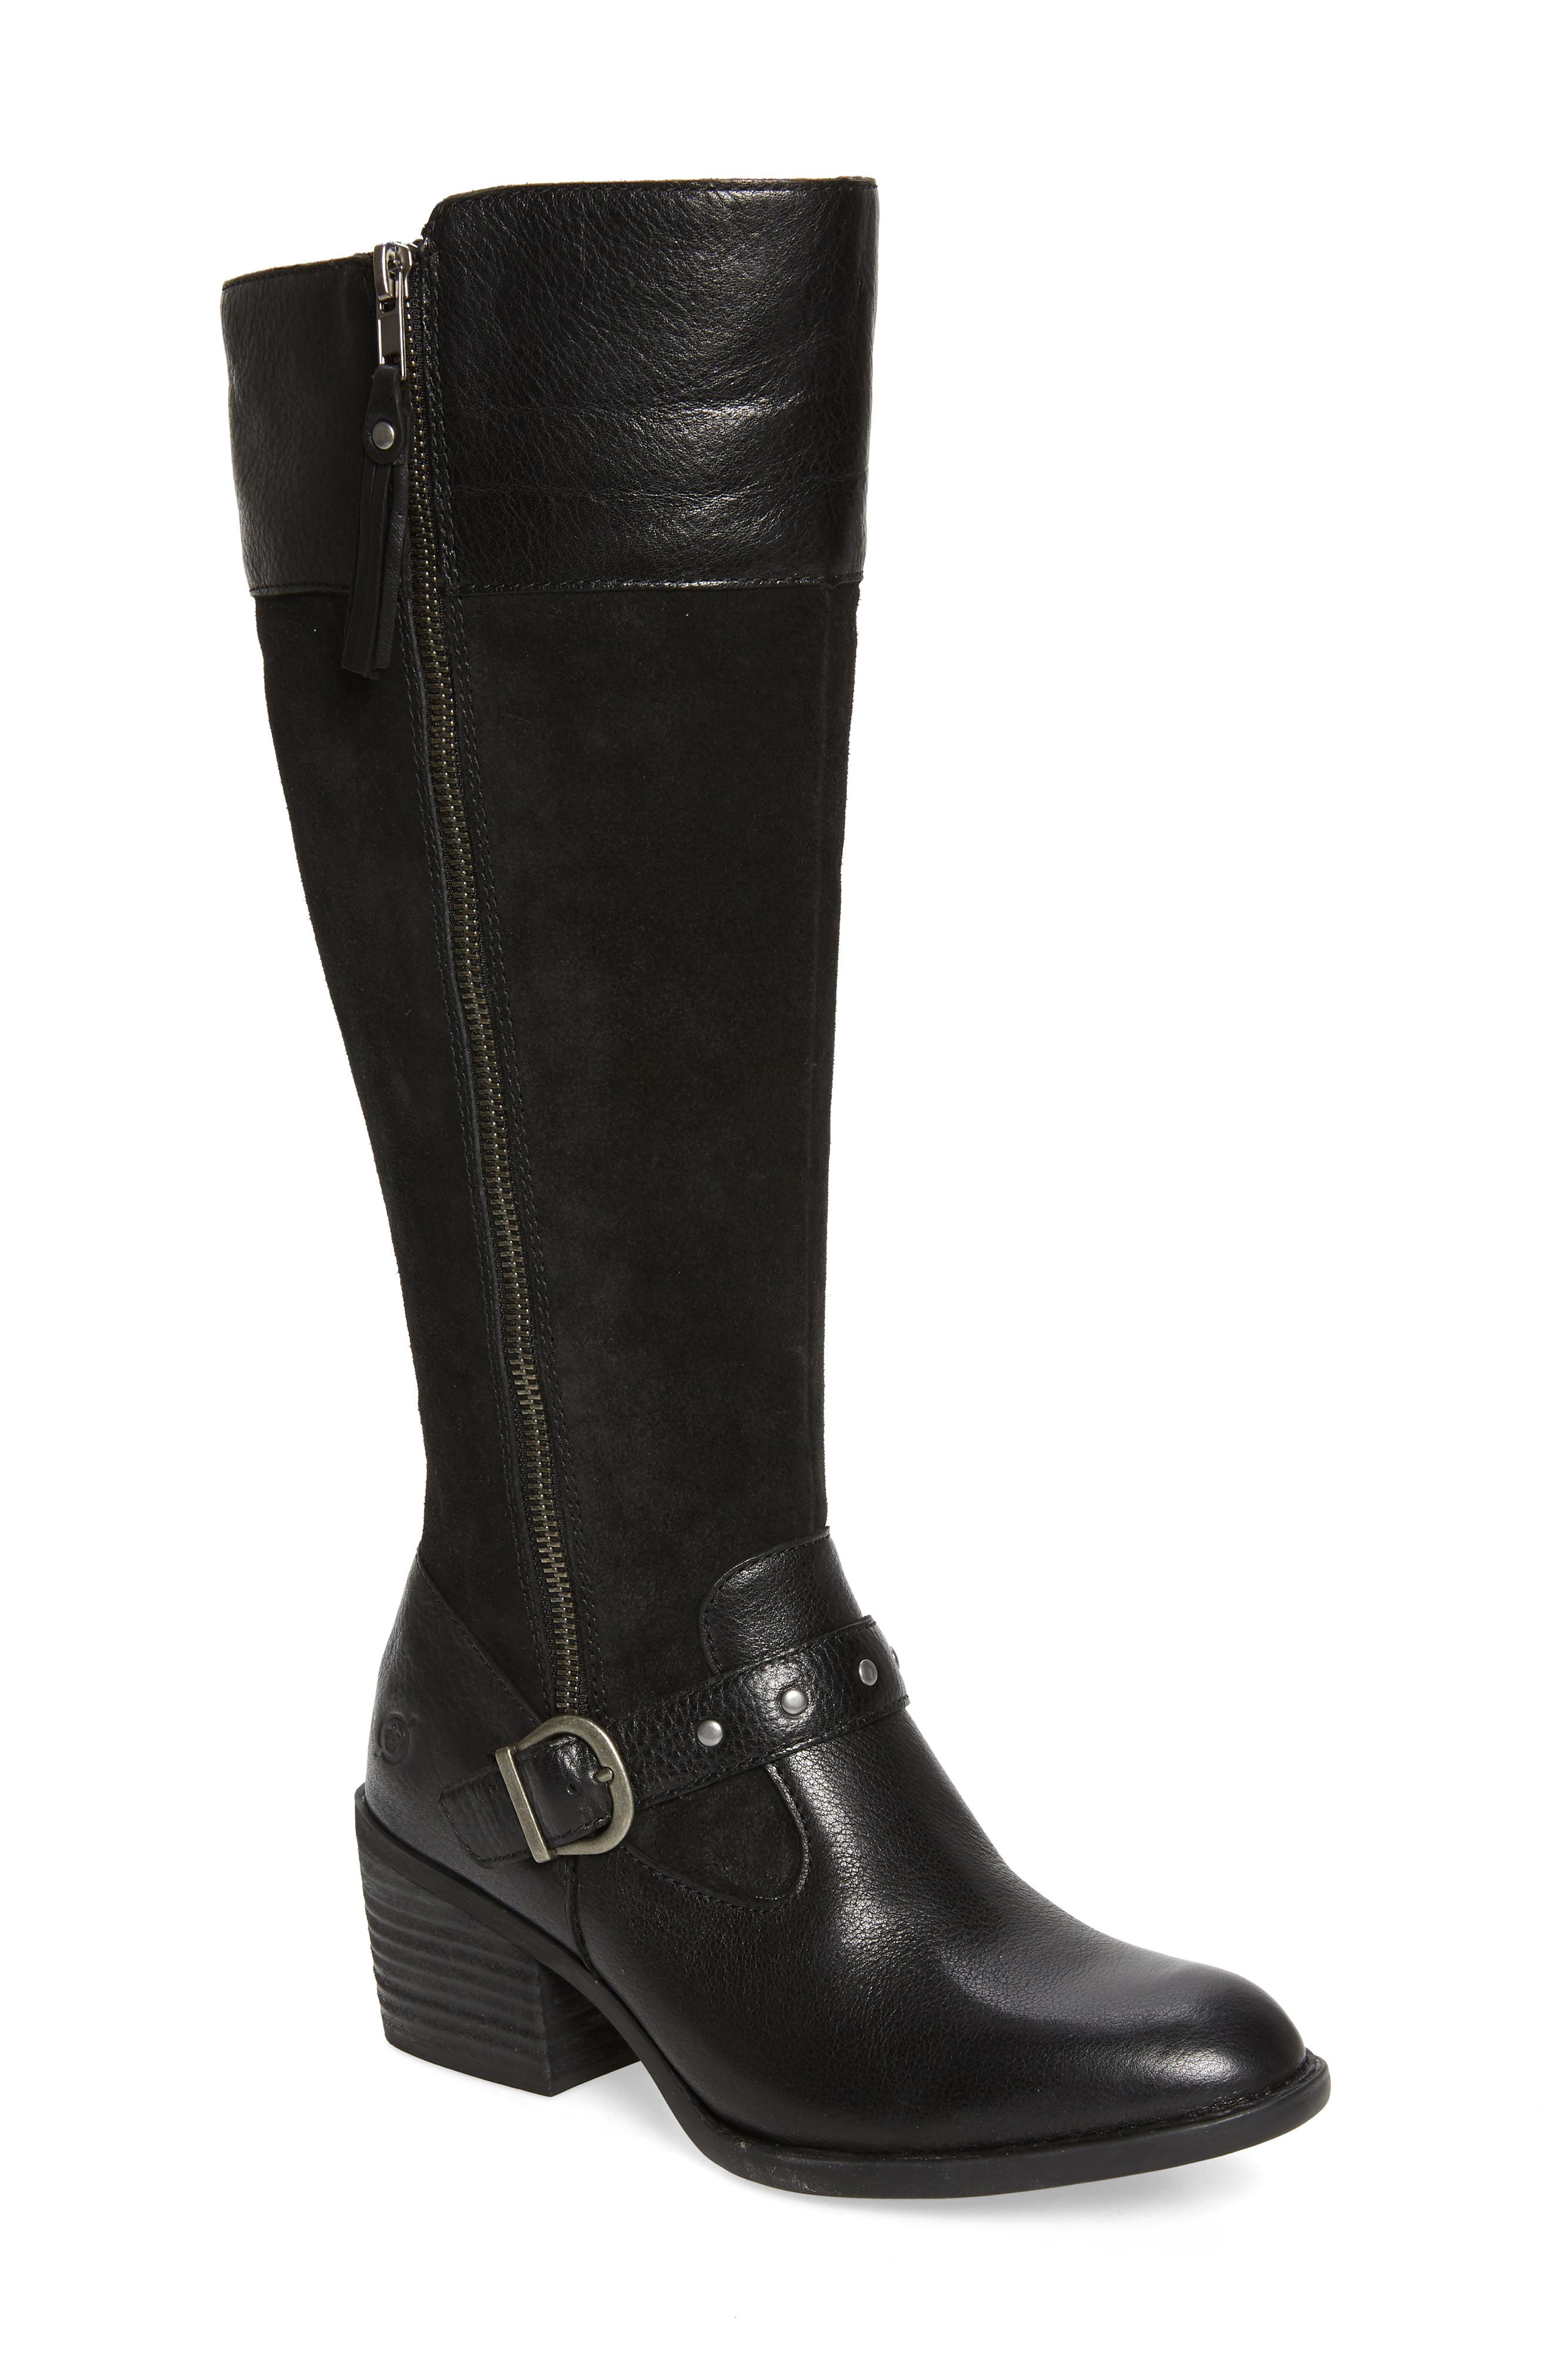 wide calf boots | Nordstrom